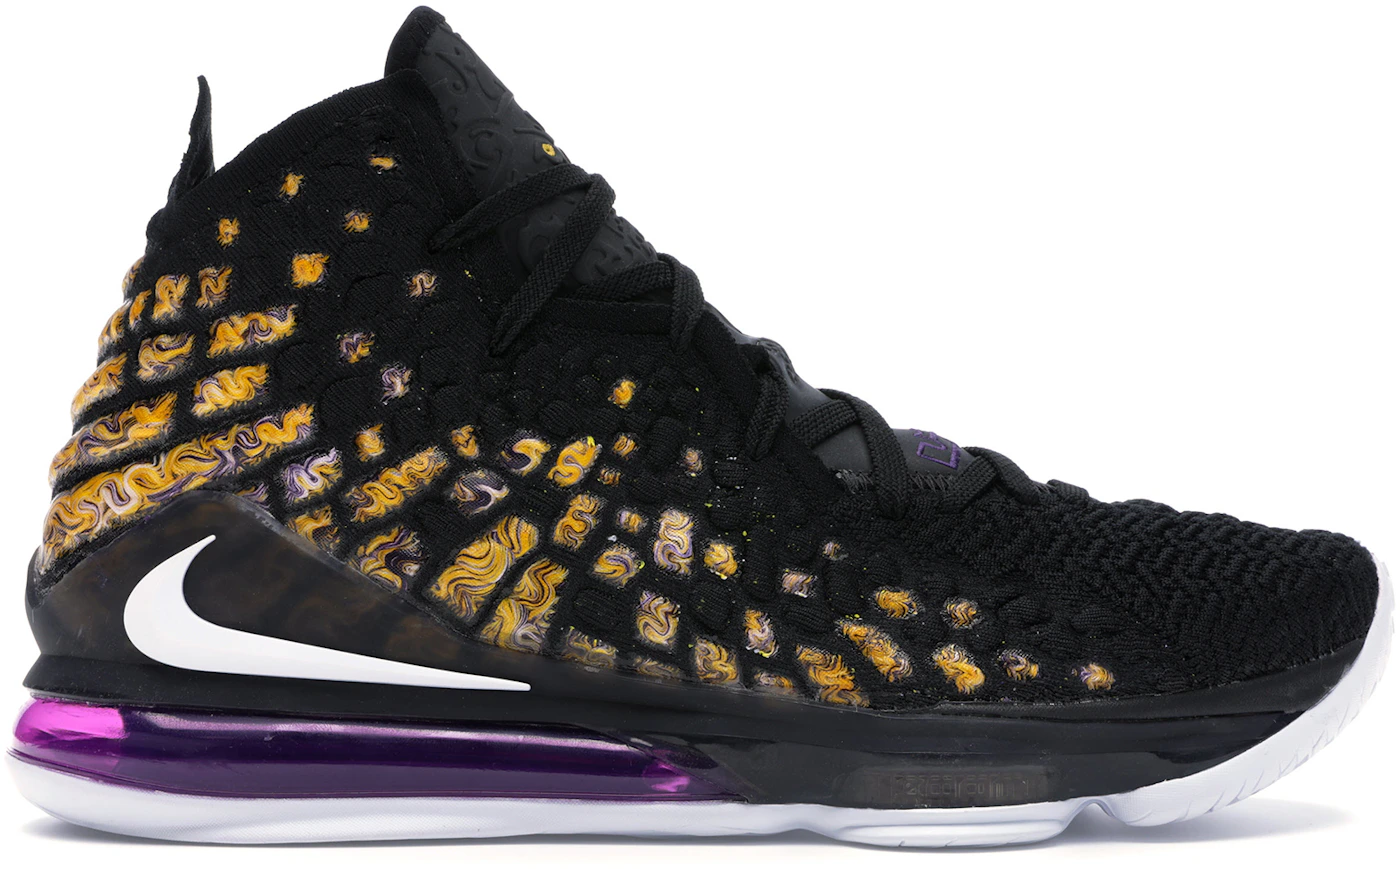 Nike LeBron 17 'Lakers' Shoes - Size 8.5